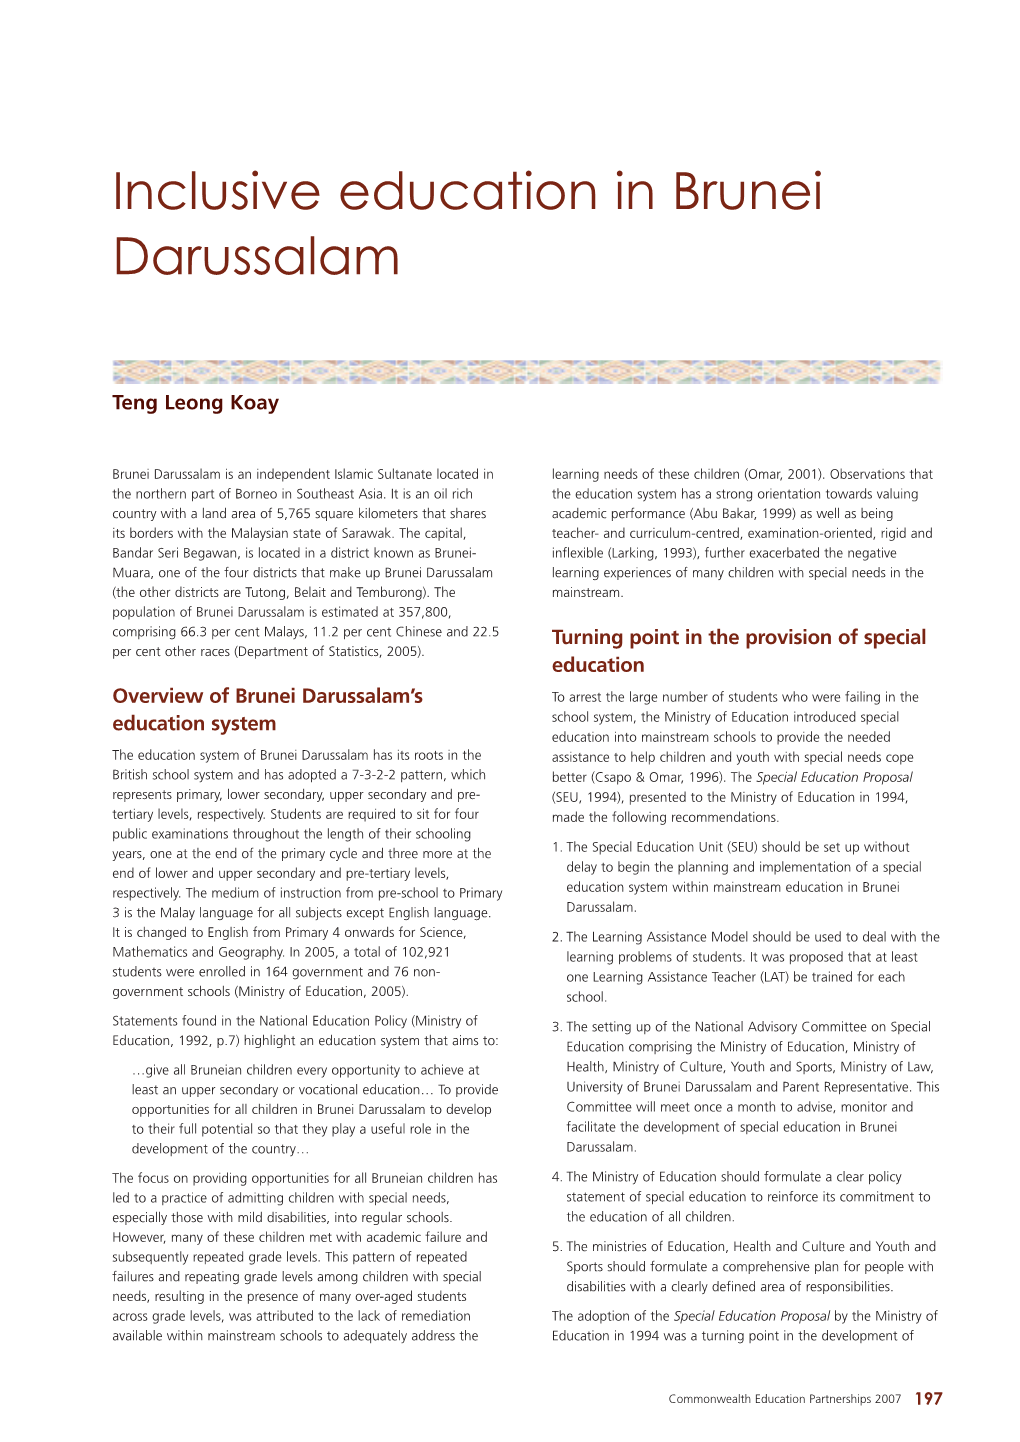 Inclusive Education in Brunei Darussalam